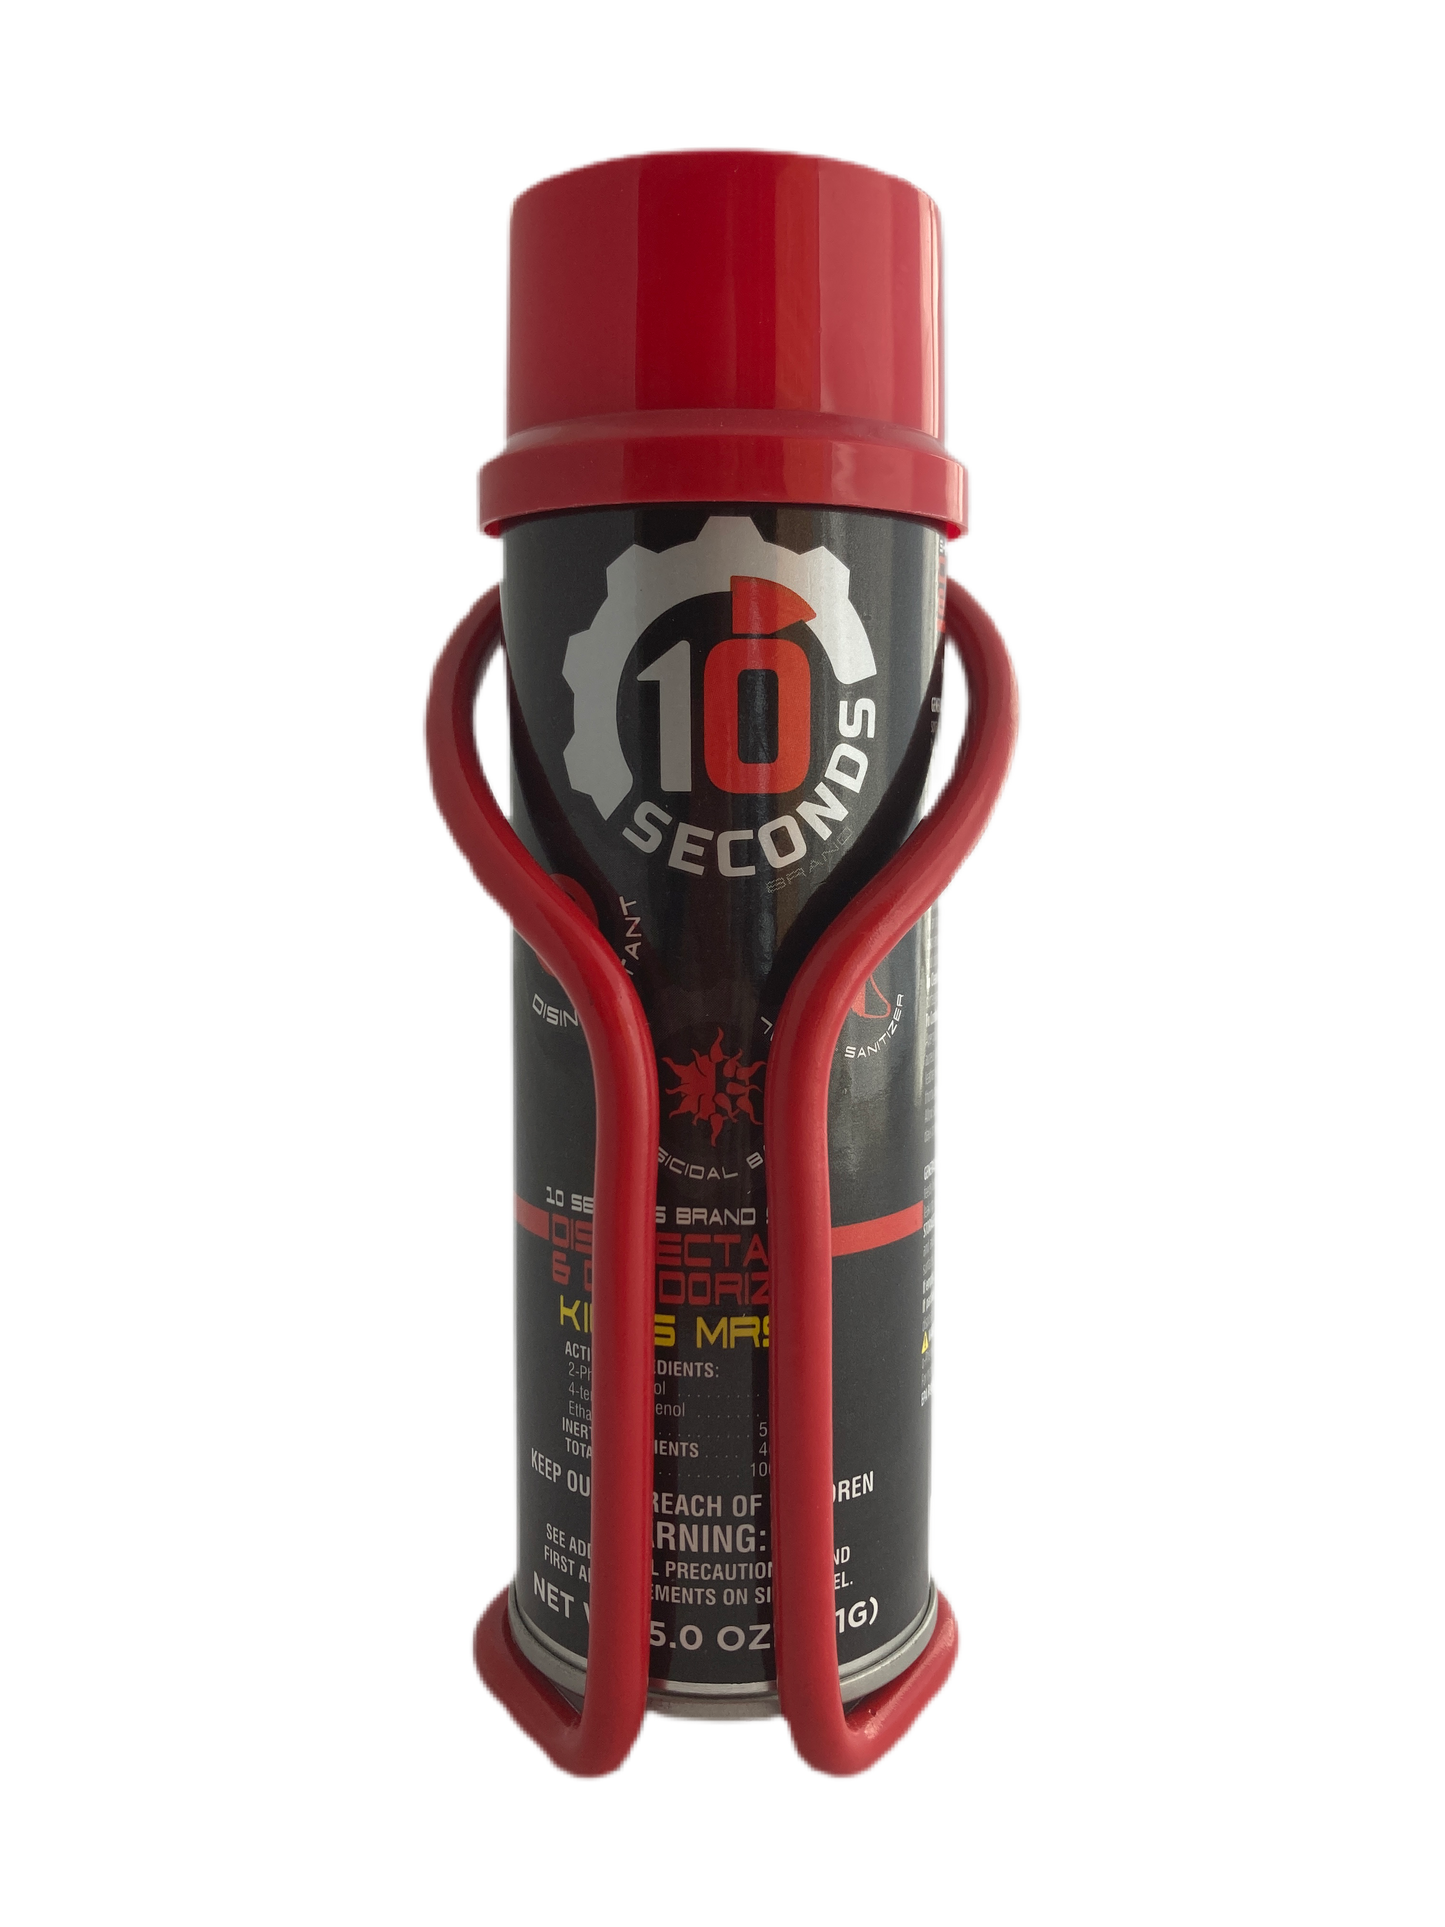 10 Seconds Brand Mag-Lock Cage + Disinfectant & Deodorizer Set